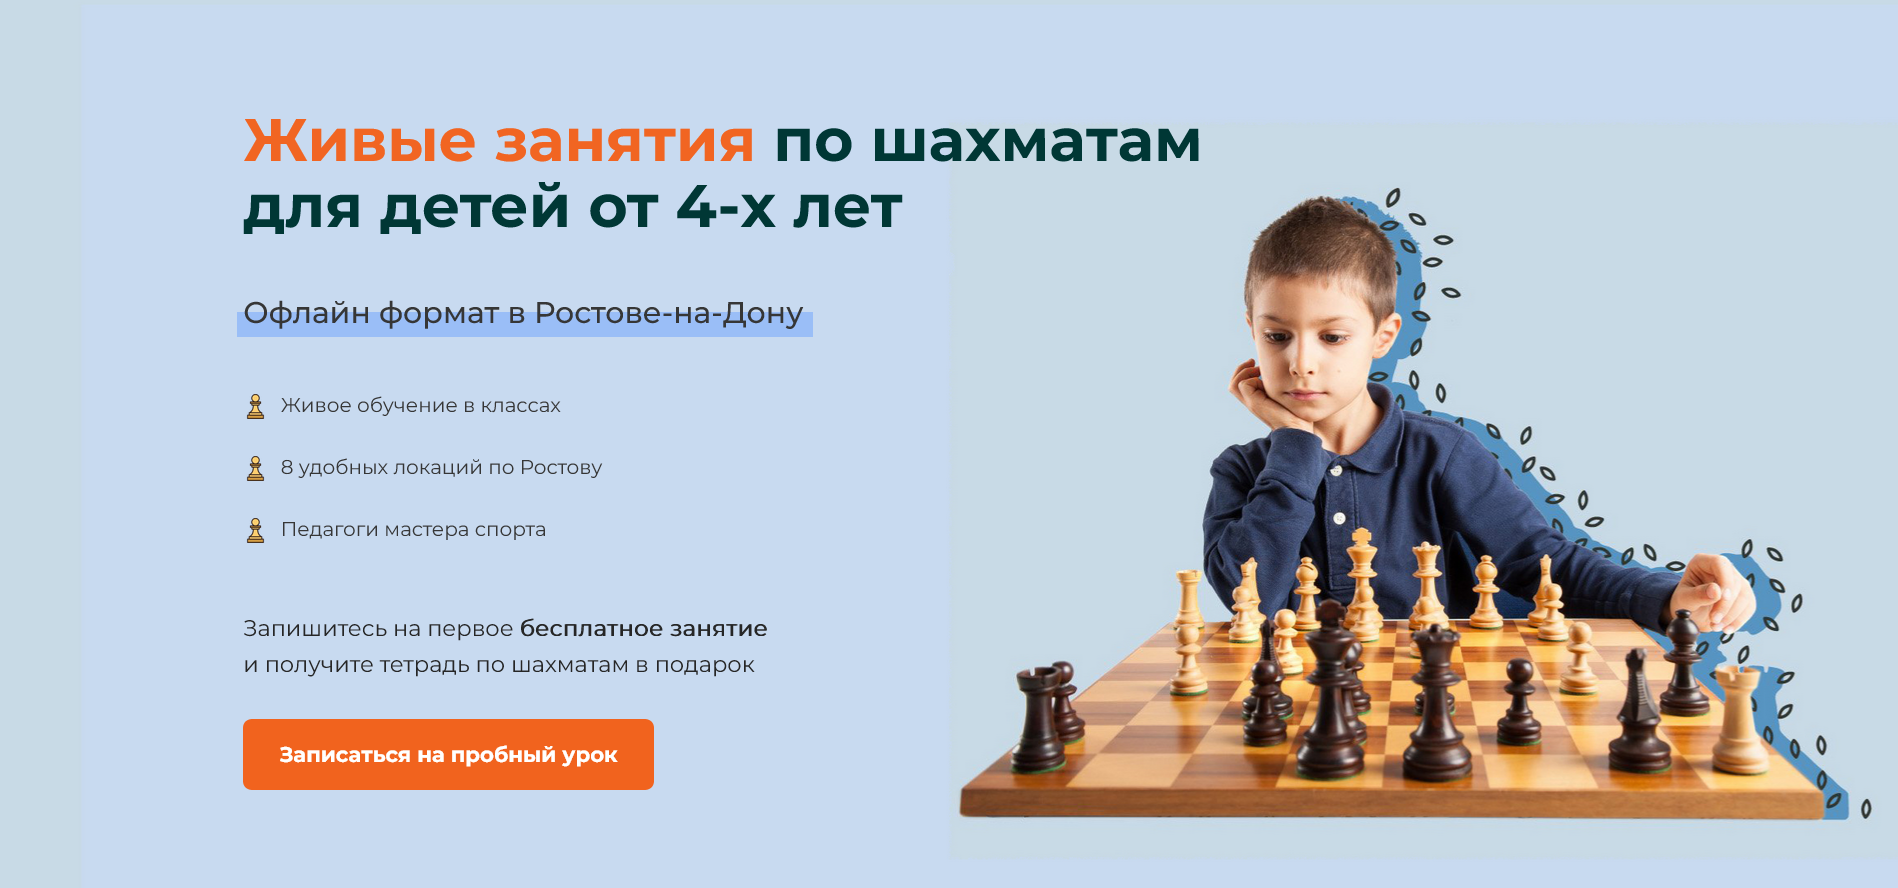 Реклама шахматного клуба для детей. Шахматы максимум. Российский сайт шахмат